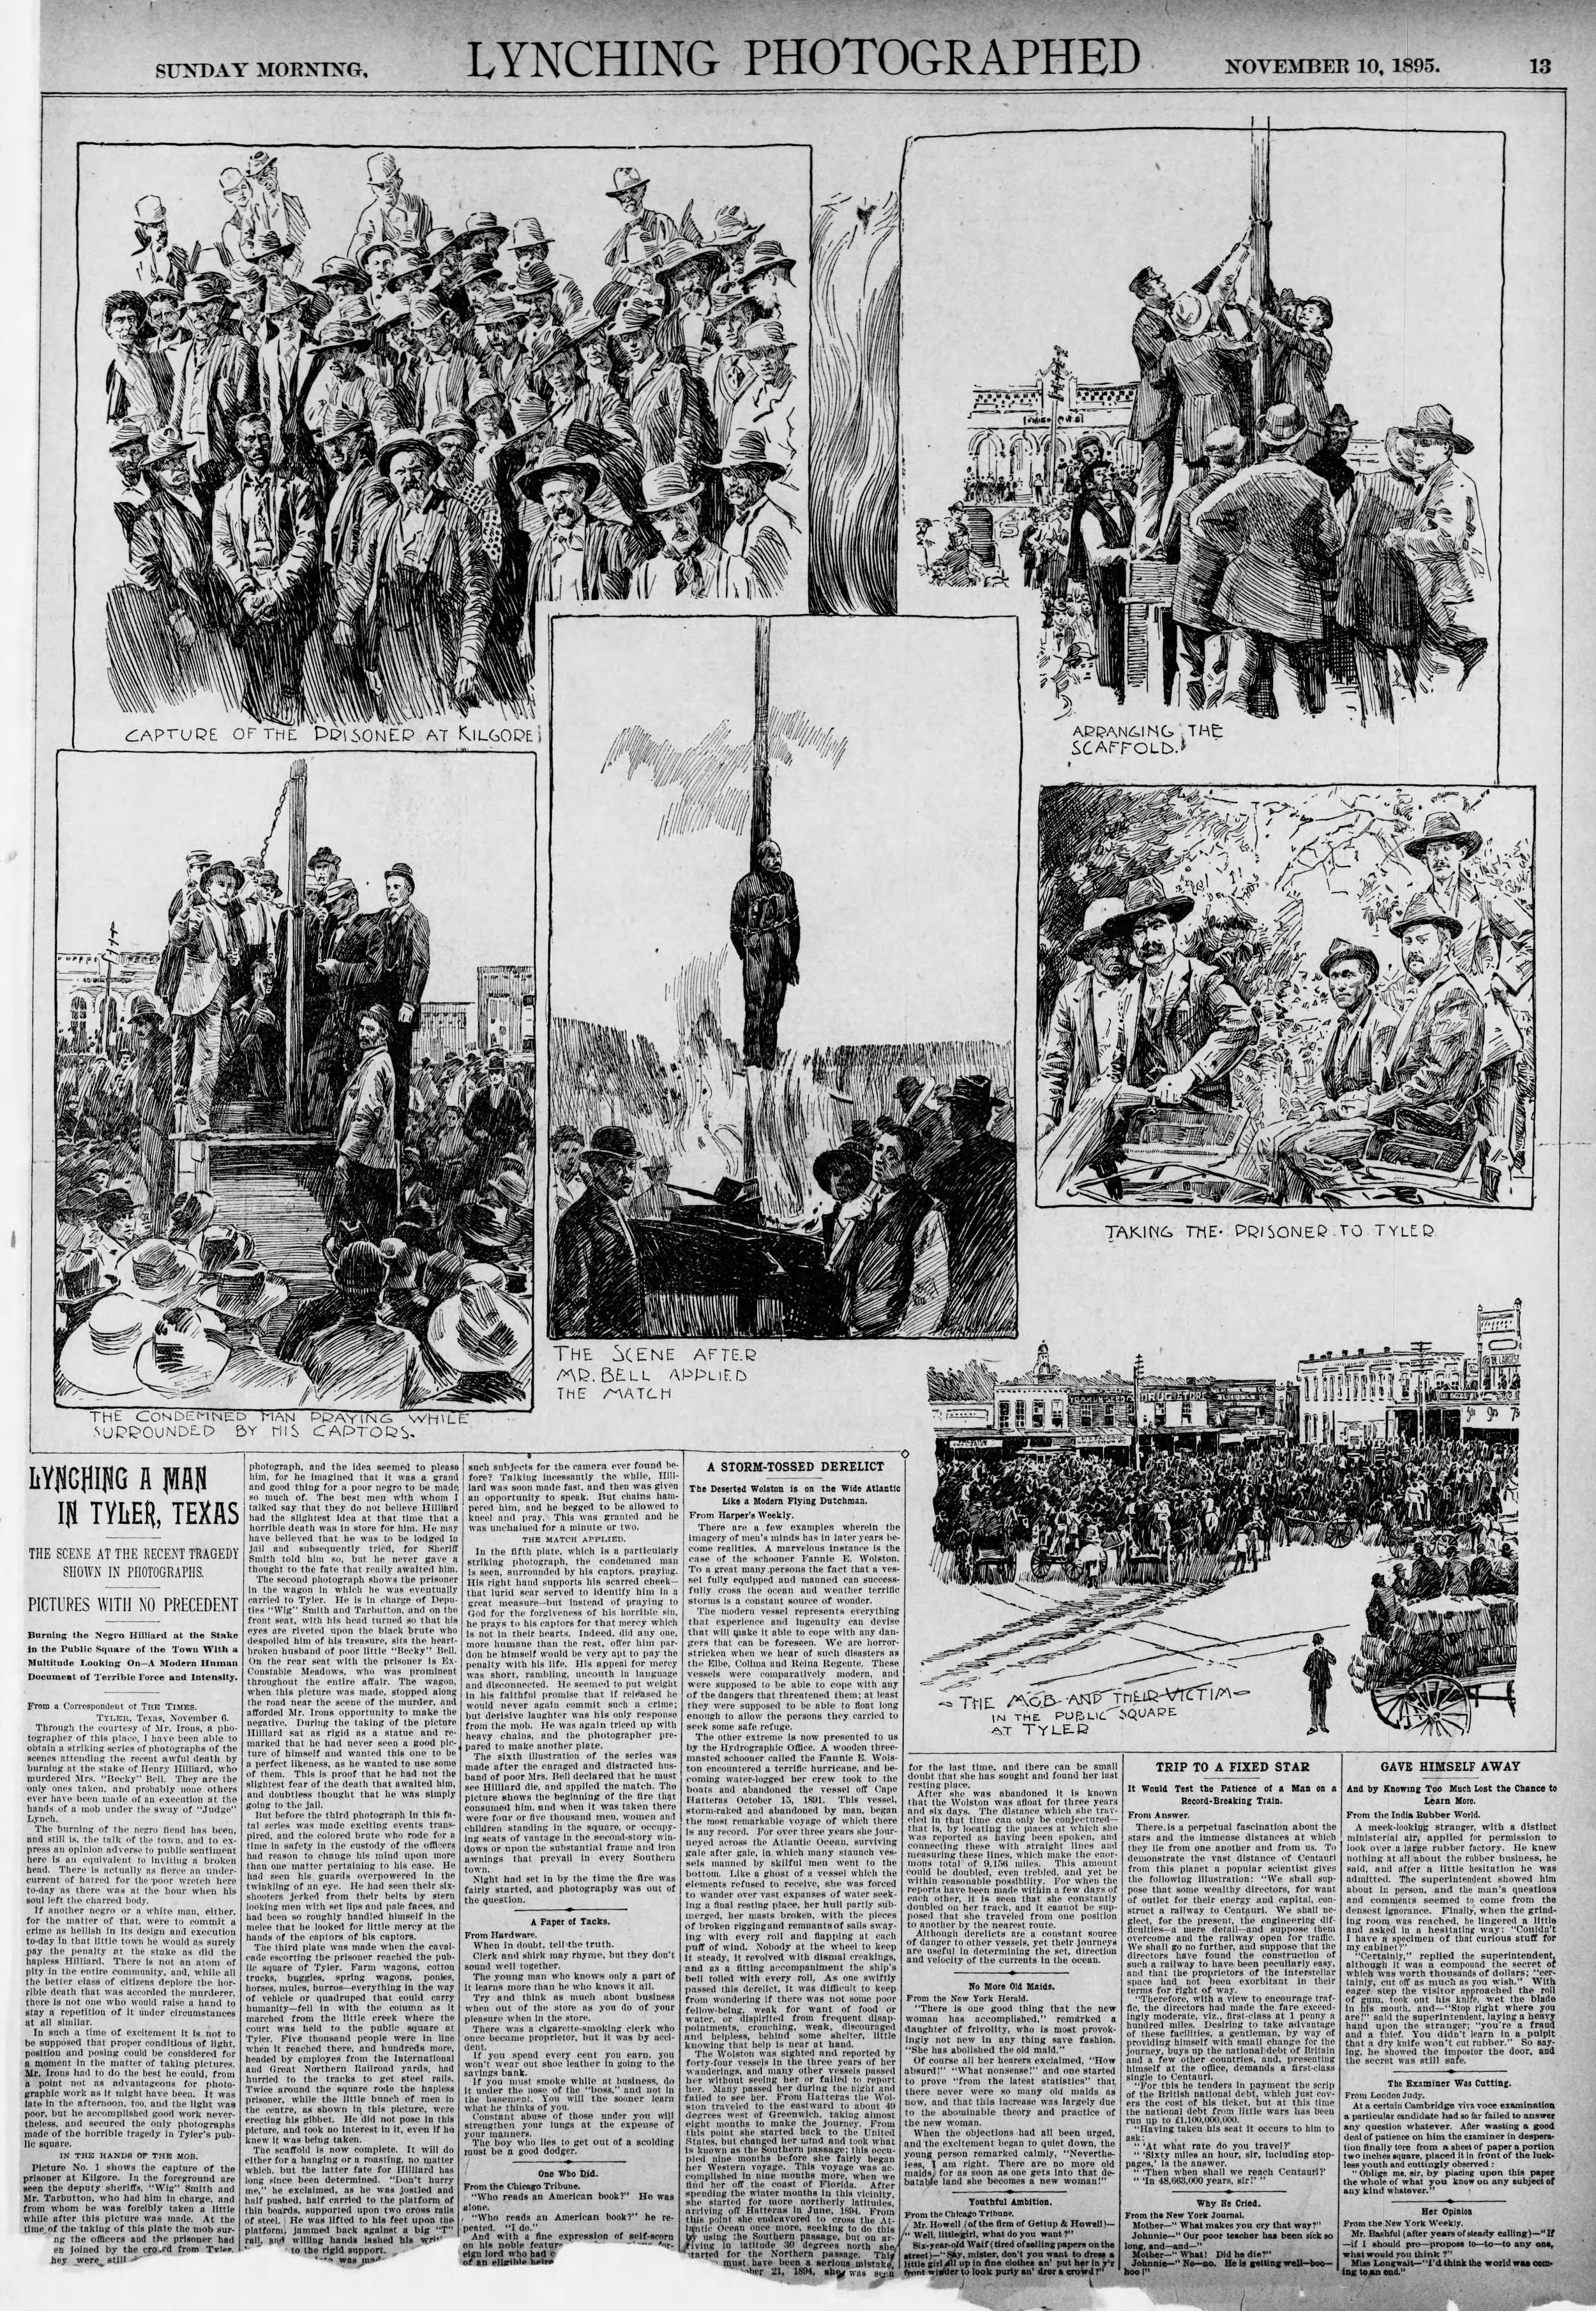 1895___Tyler_Lynching_Made_National_News.jpg